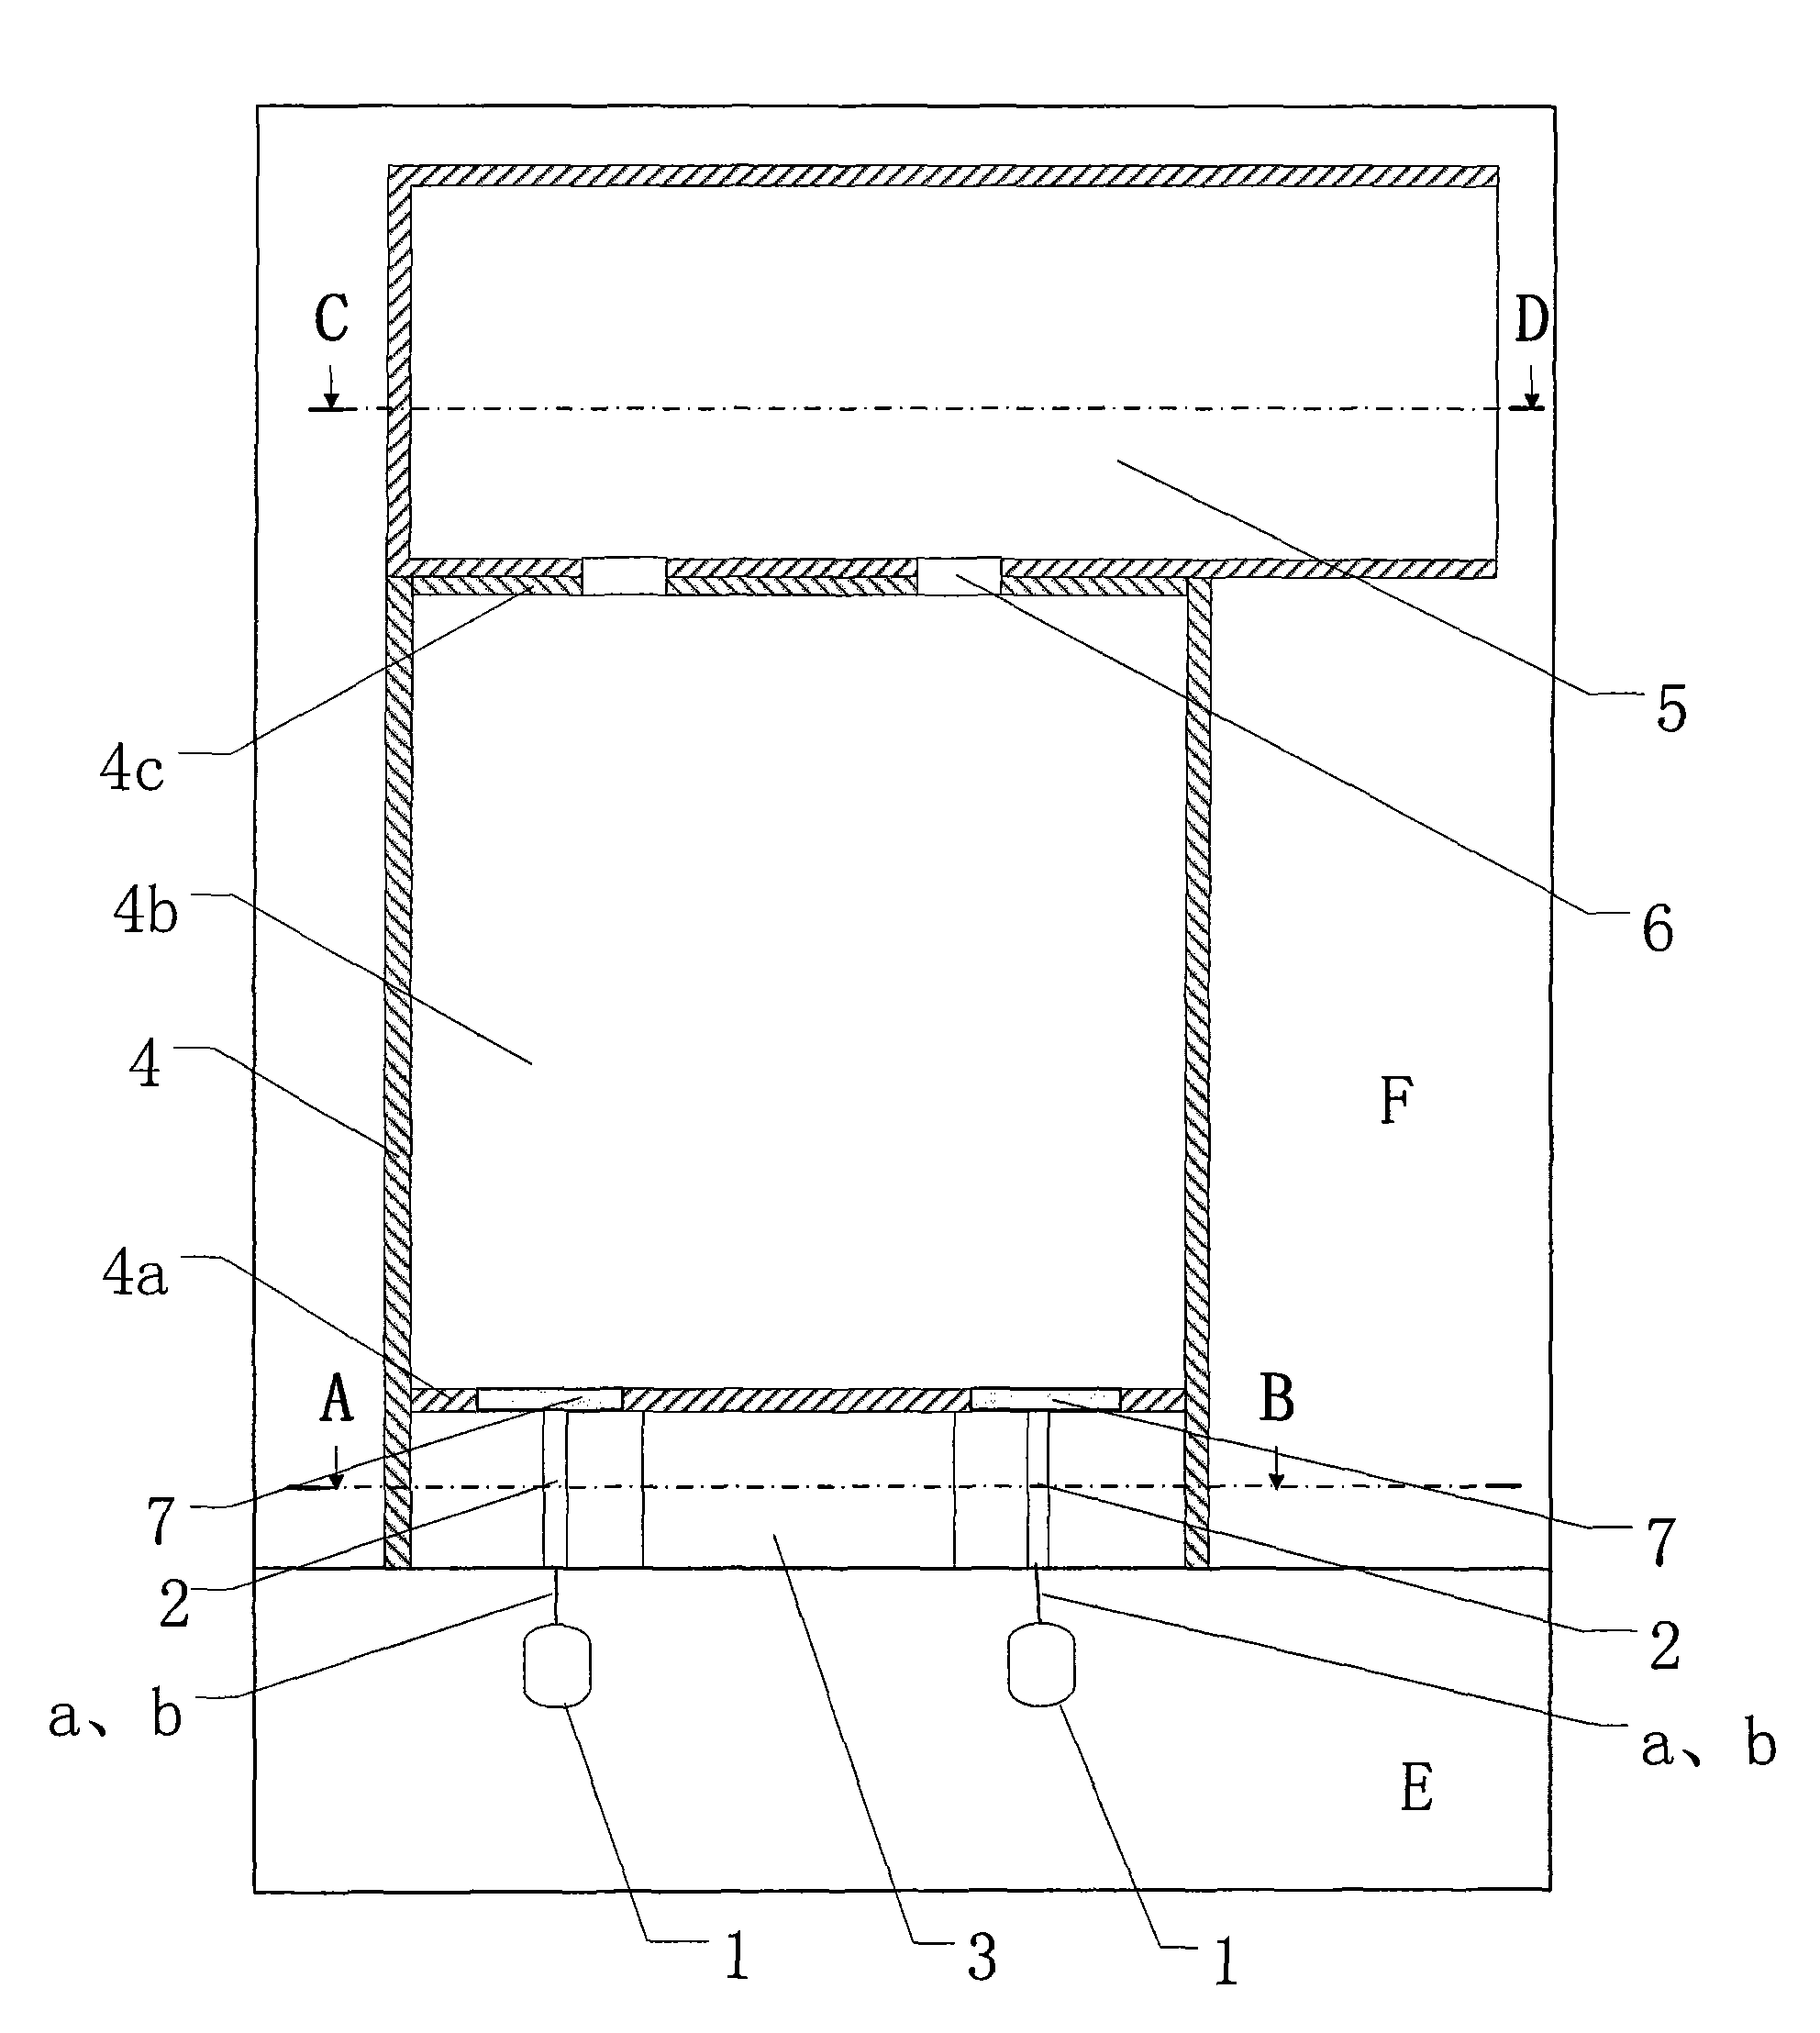 TE011-lambada/4-pi mode resonator with three-dimensional structure